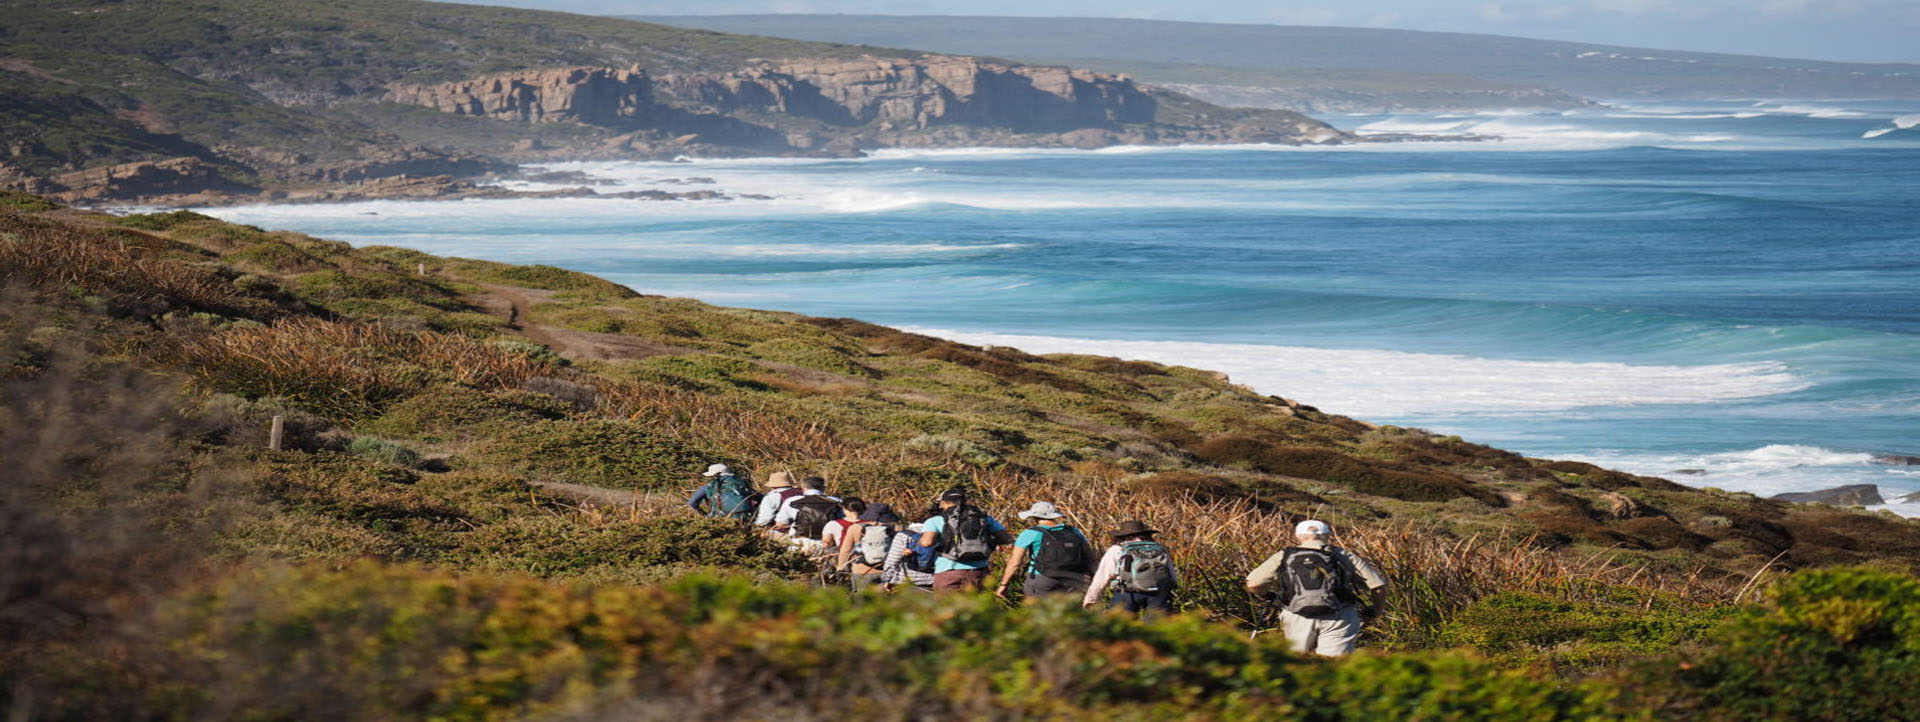 WALKING TOURS Western Australia group in line along cliff